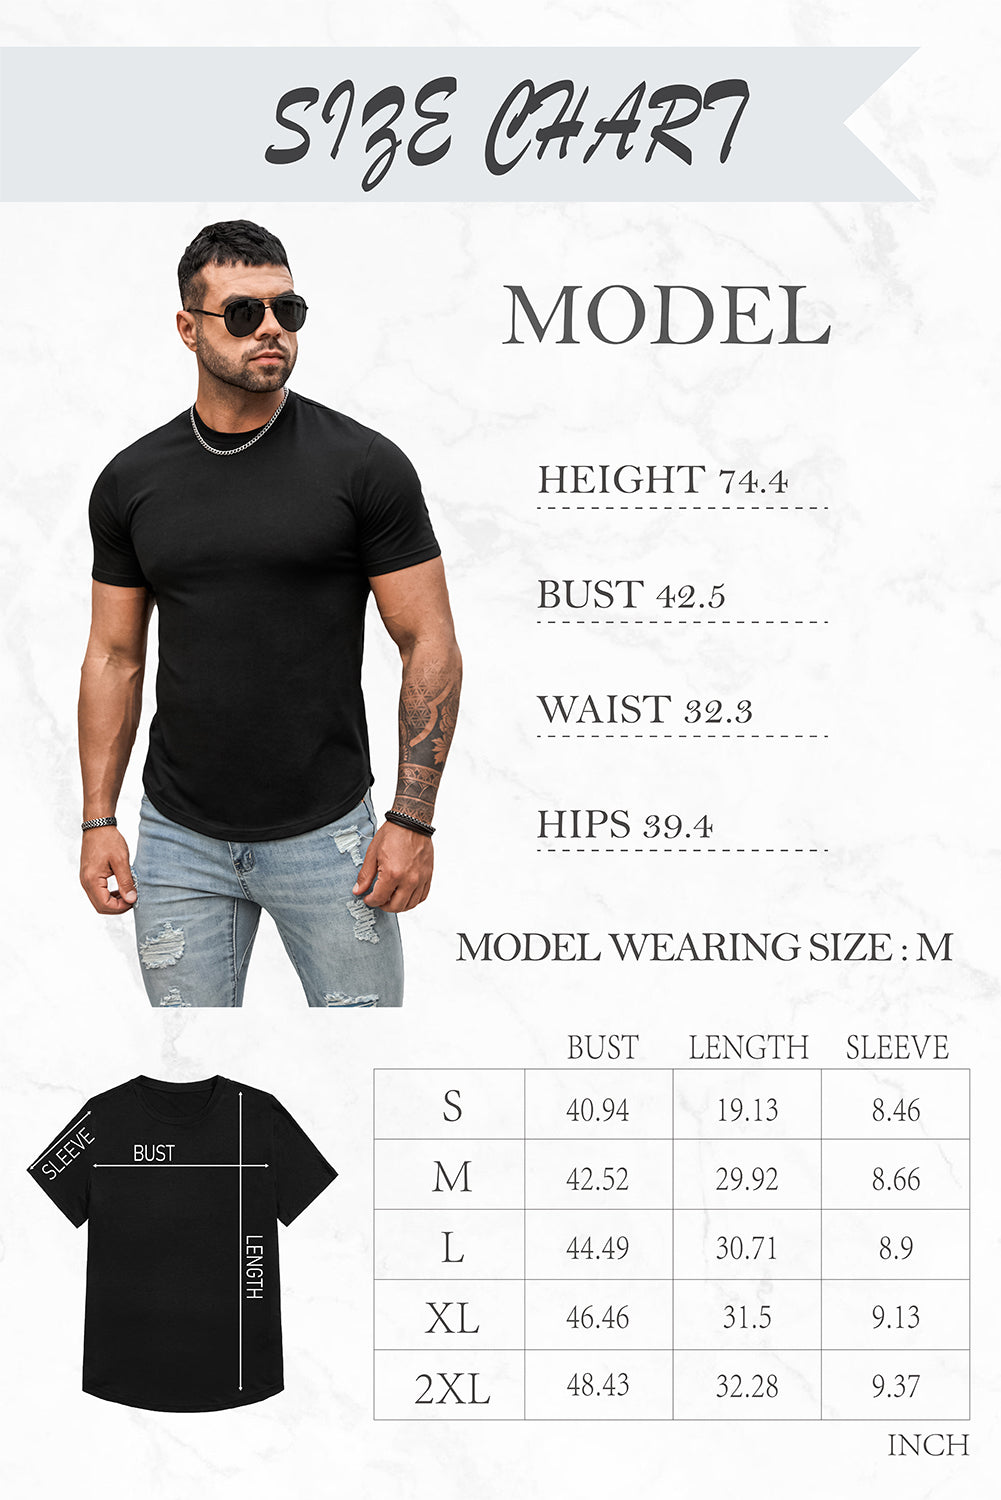 Black BROOKLYN Tie Dyed Print Short Sleeve Men's T-shirt Men's Tops JT's Designer Fashion